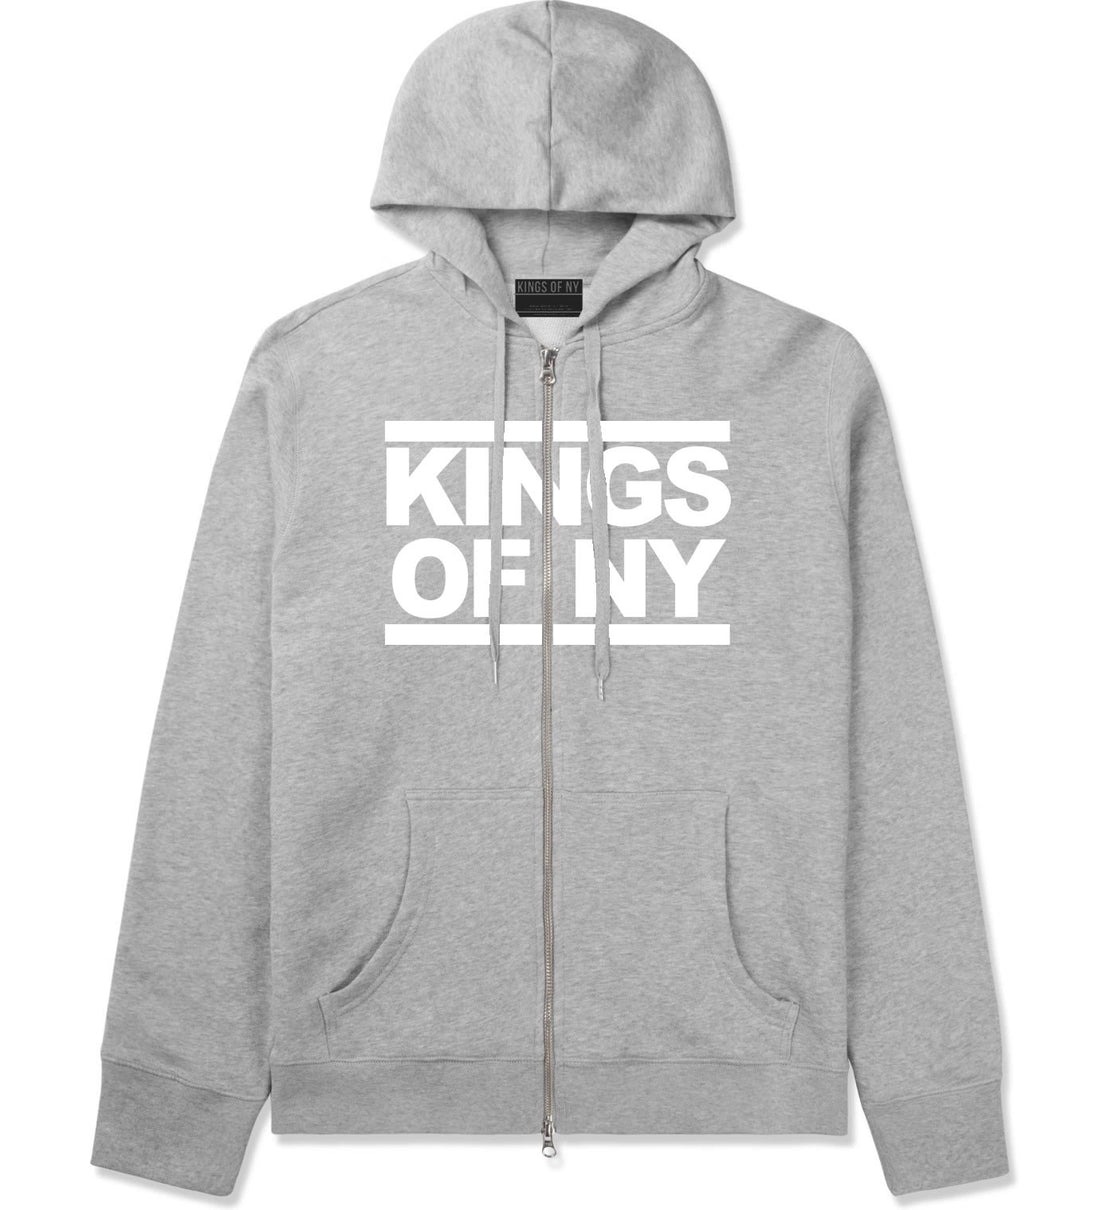 Kings Of NY Run DMC Logo Style Zip Up Hoodie in Grey By Kings Of NY